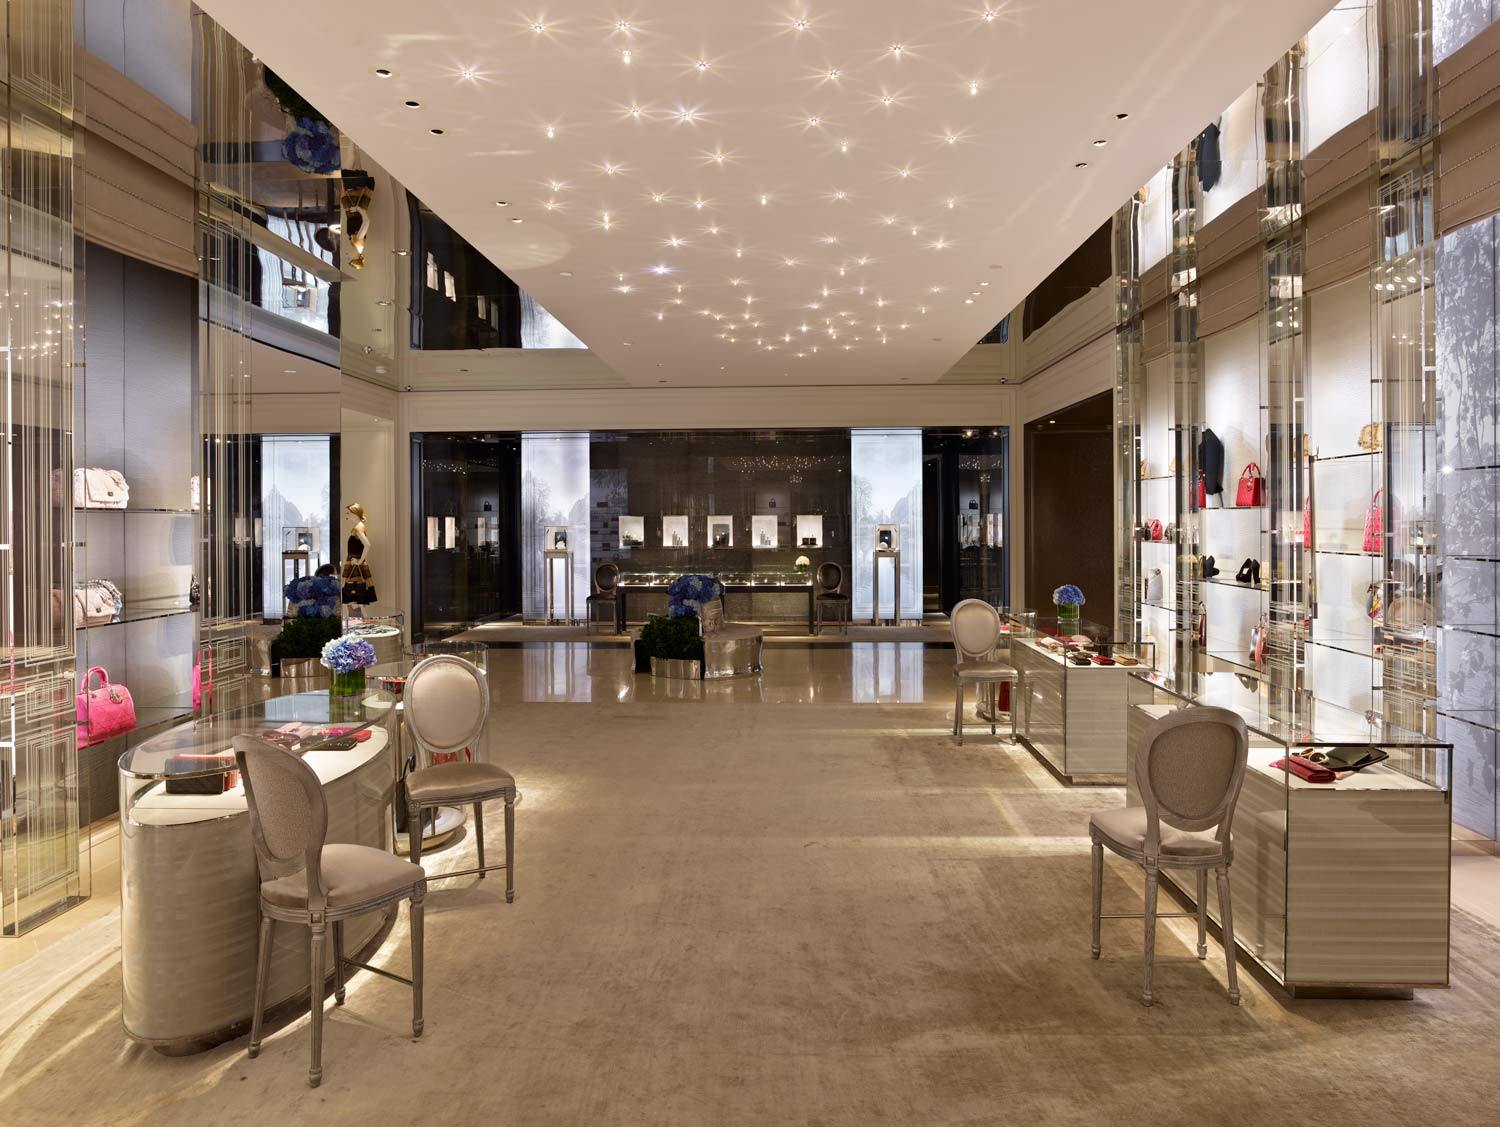 DIOR, Dior Boutique, USA, Beverly Hills